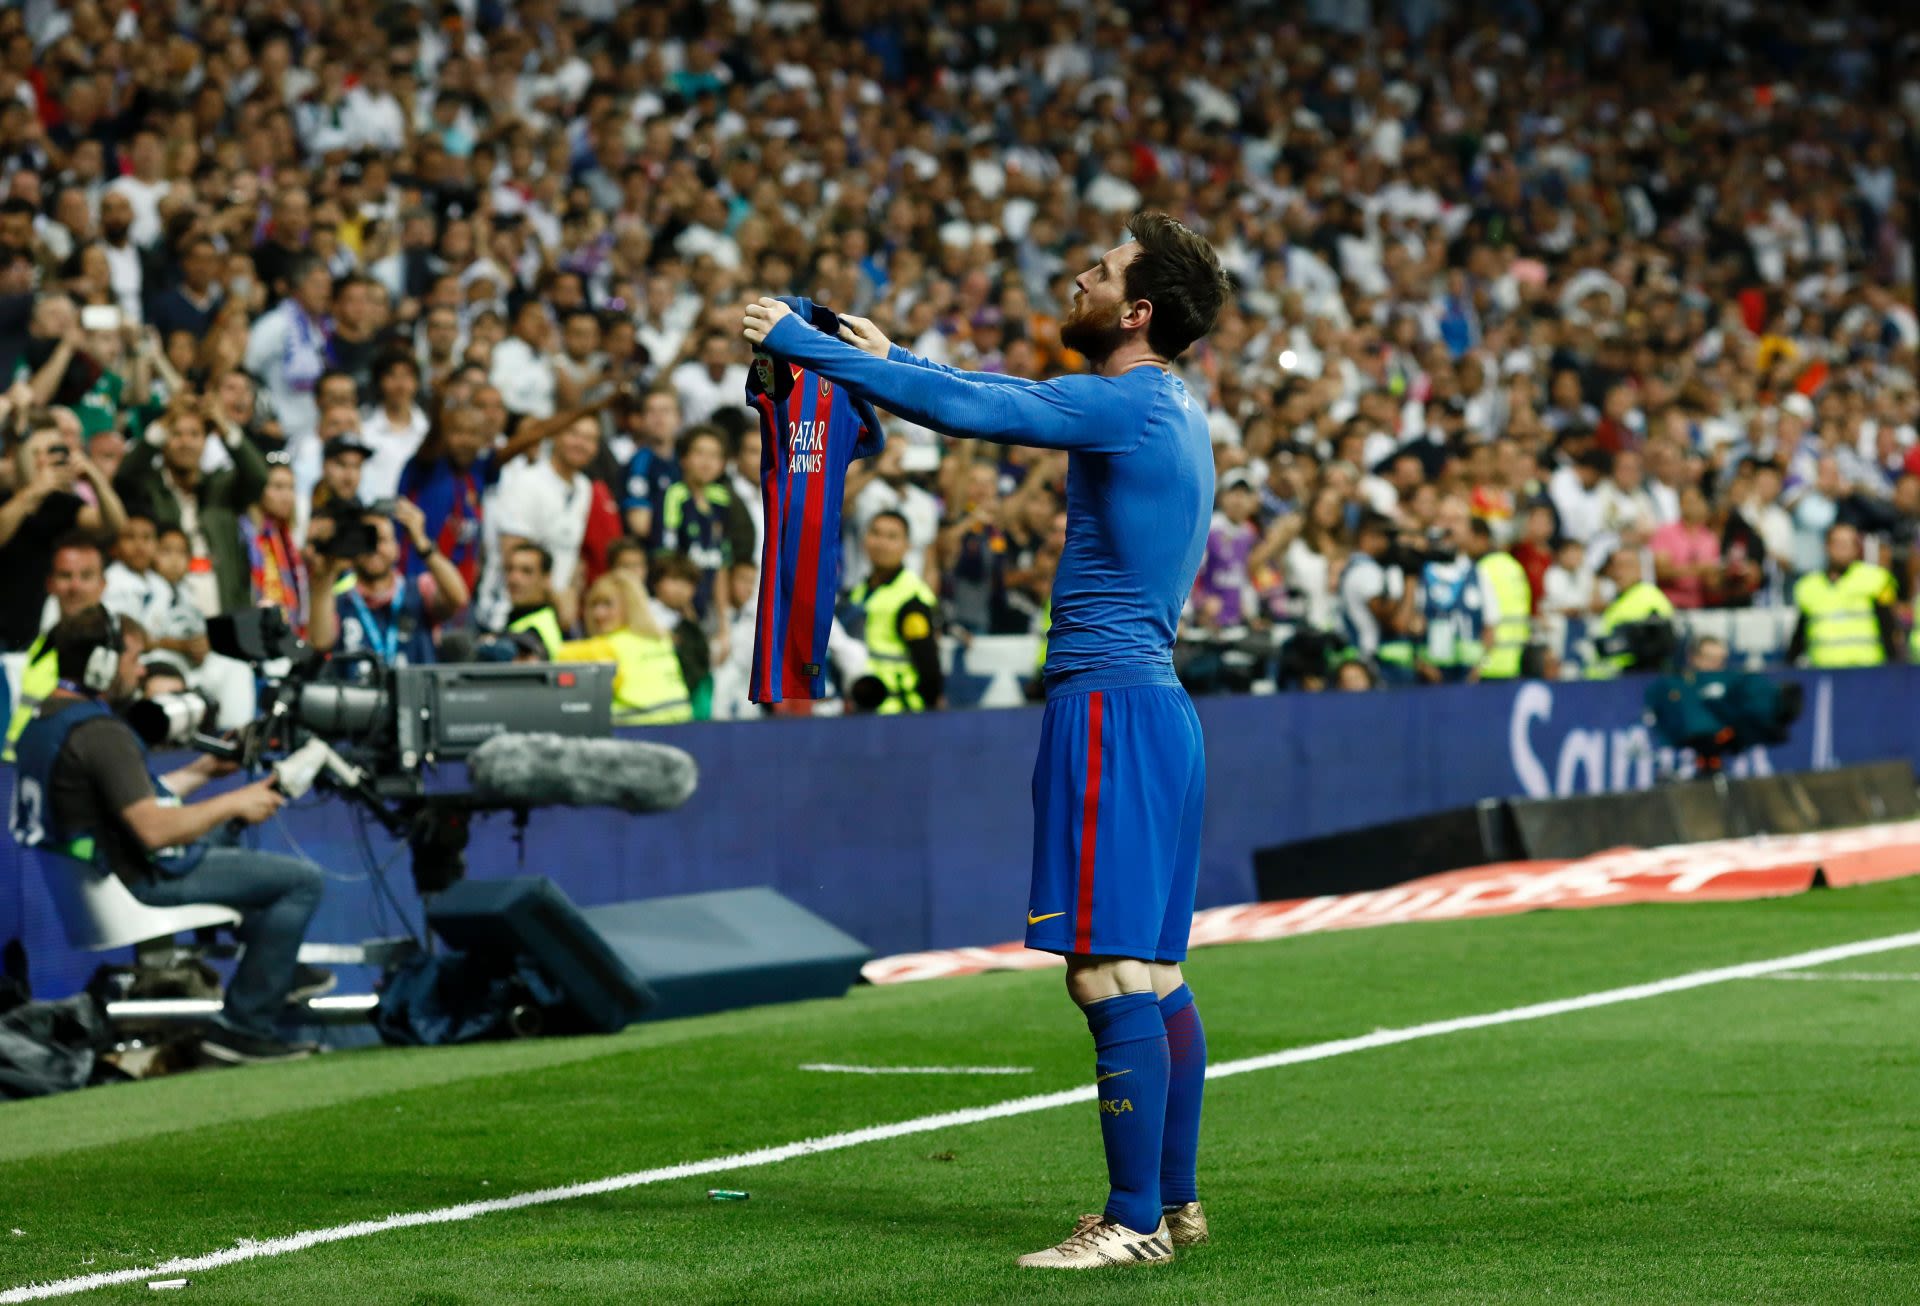 Watch: Lionel Messi’s iconic 2017 celebration haunts Santiago Bernabeu once again